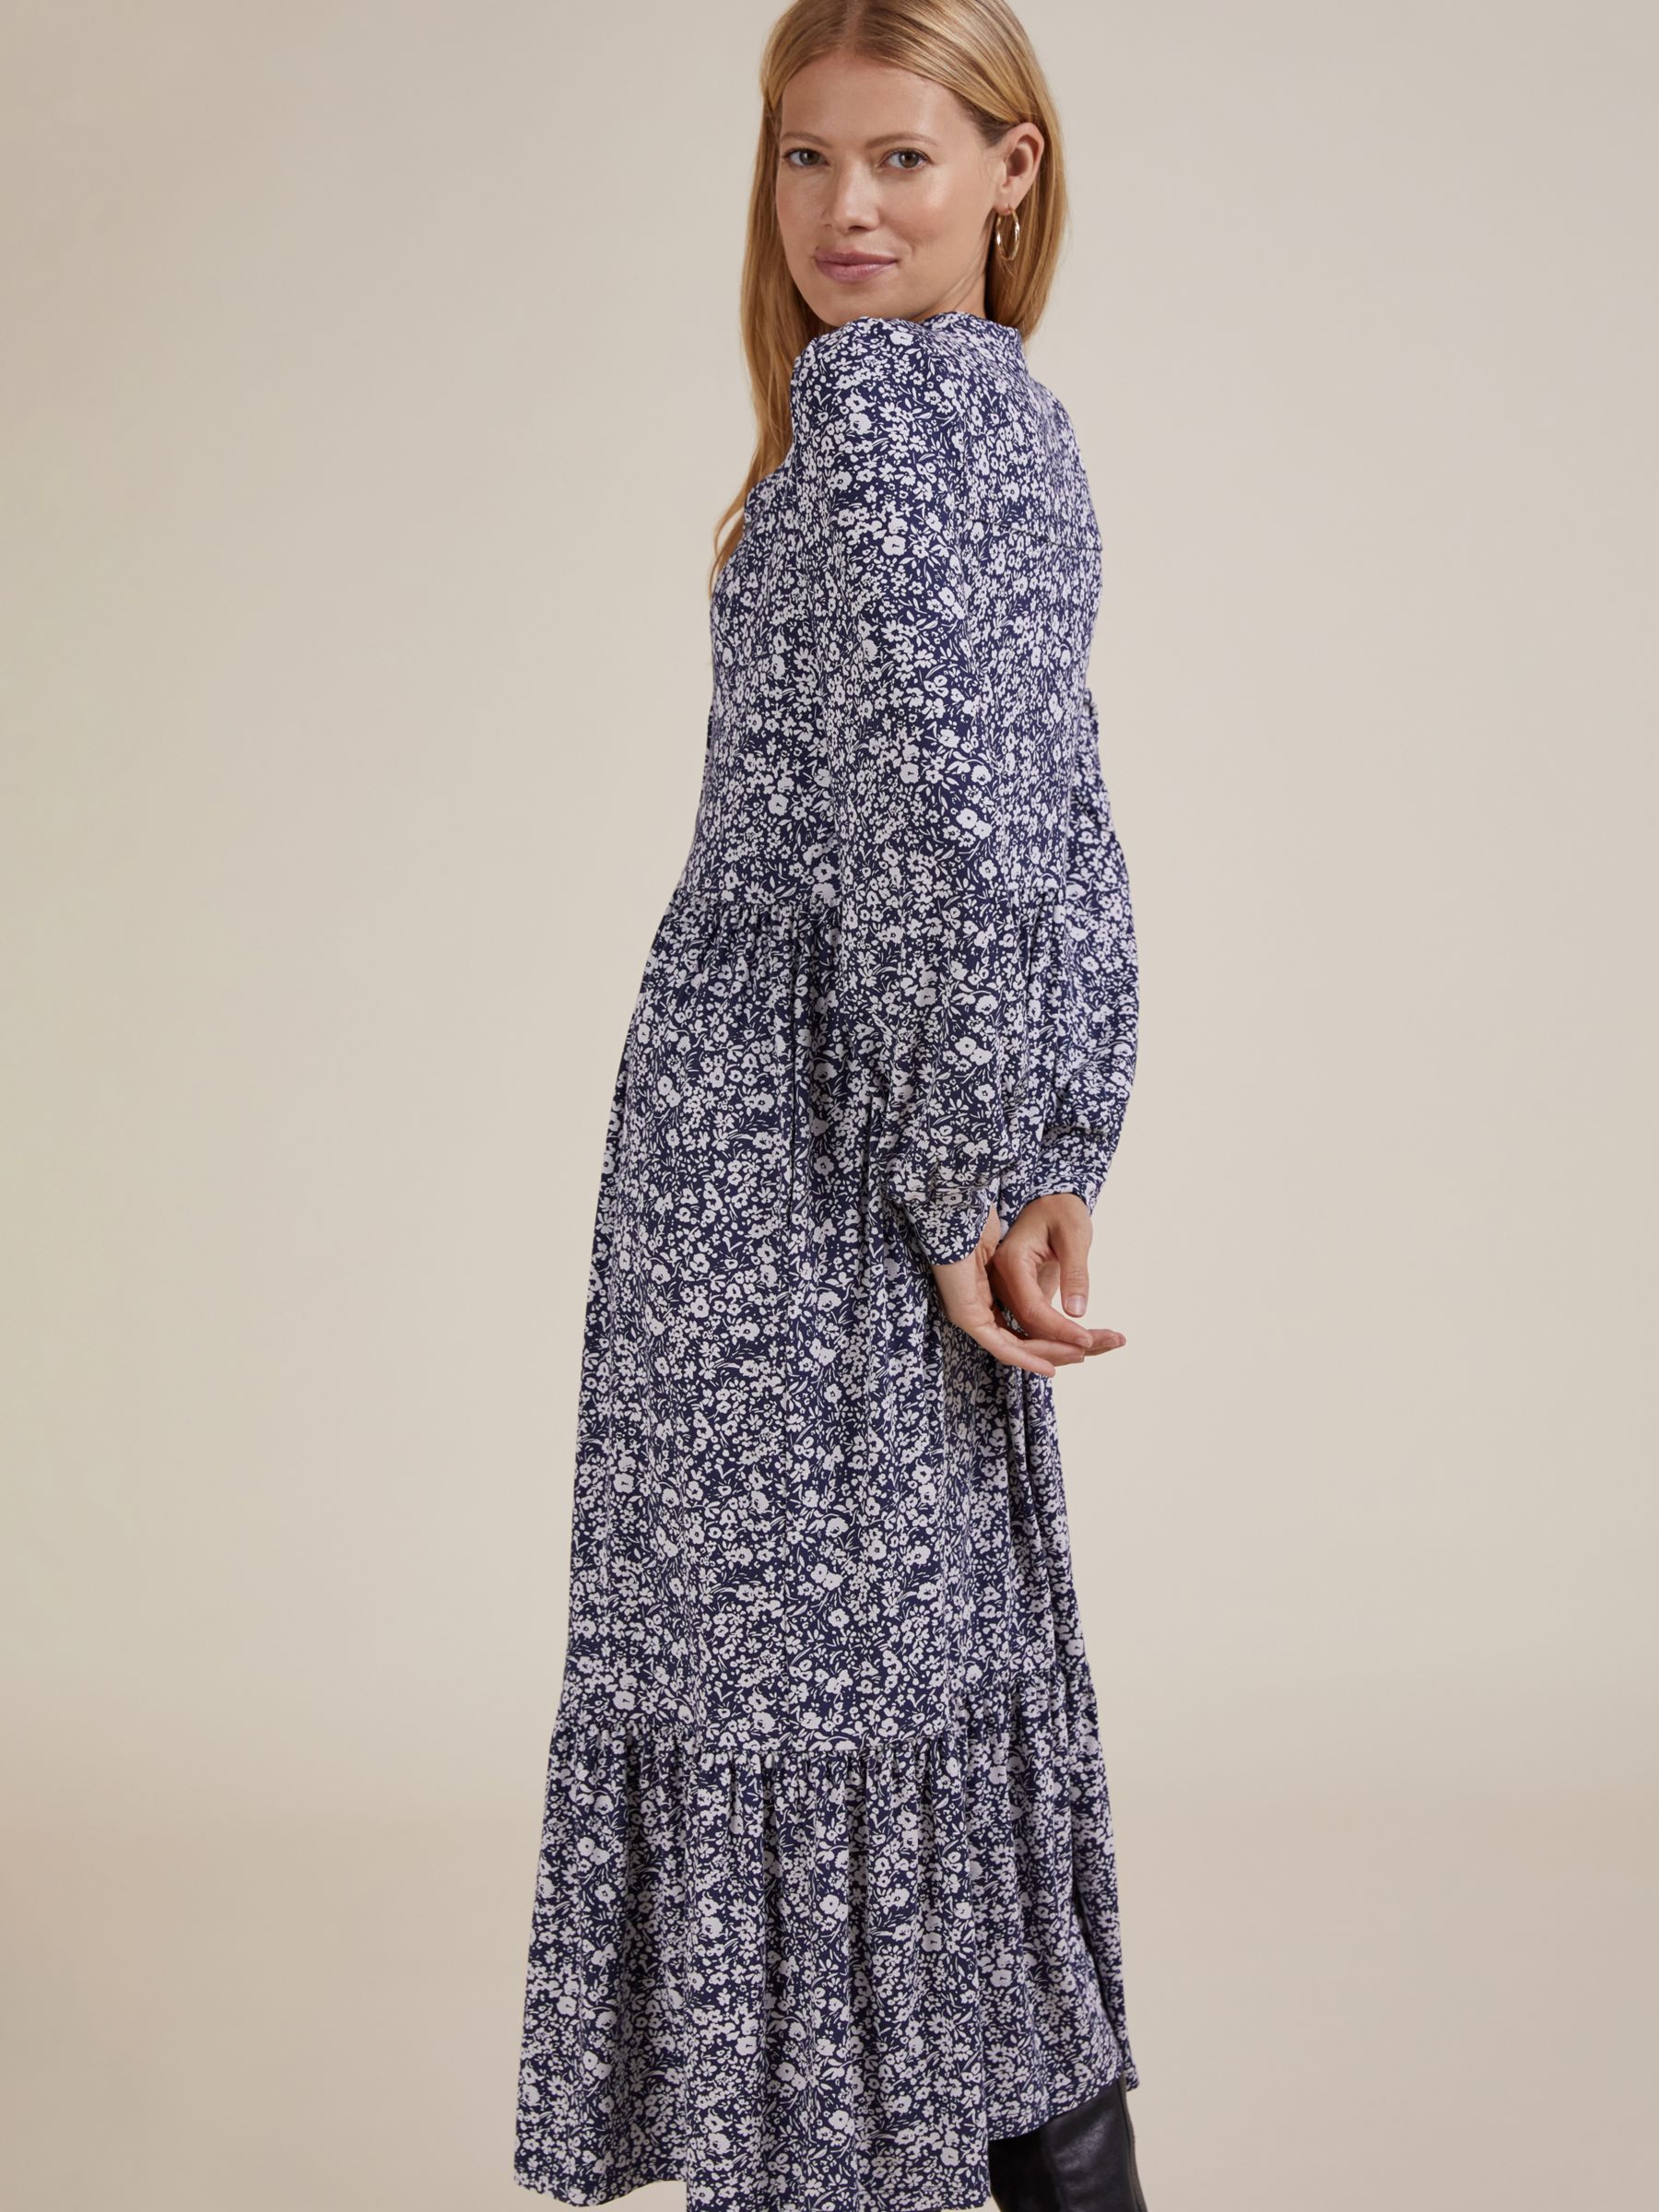 Baukjen Adilah Floral Midi Dress, Indigo at John Lewis & Partners